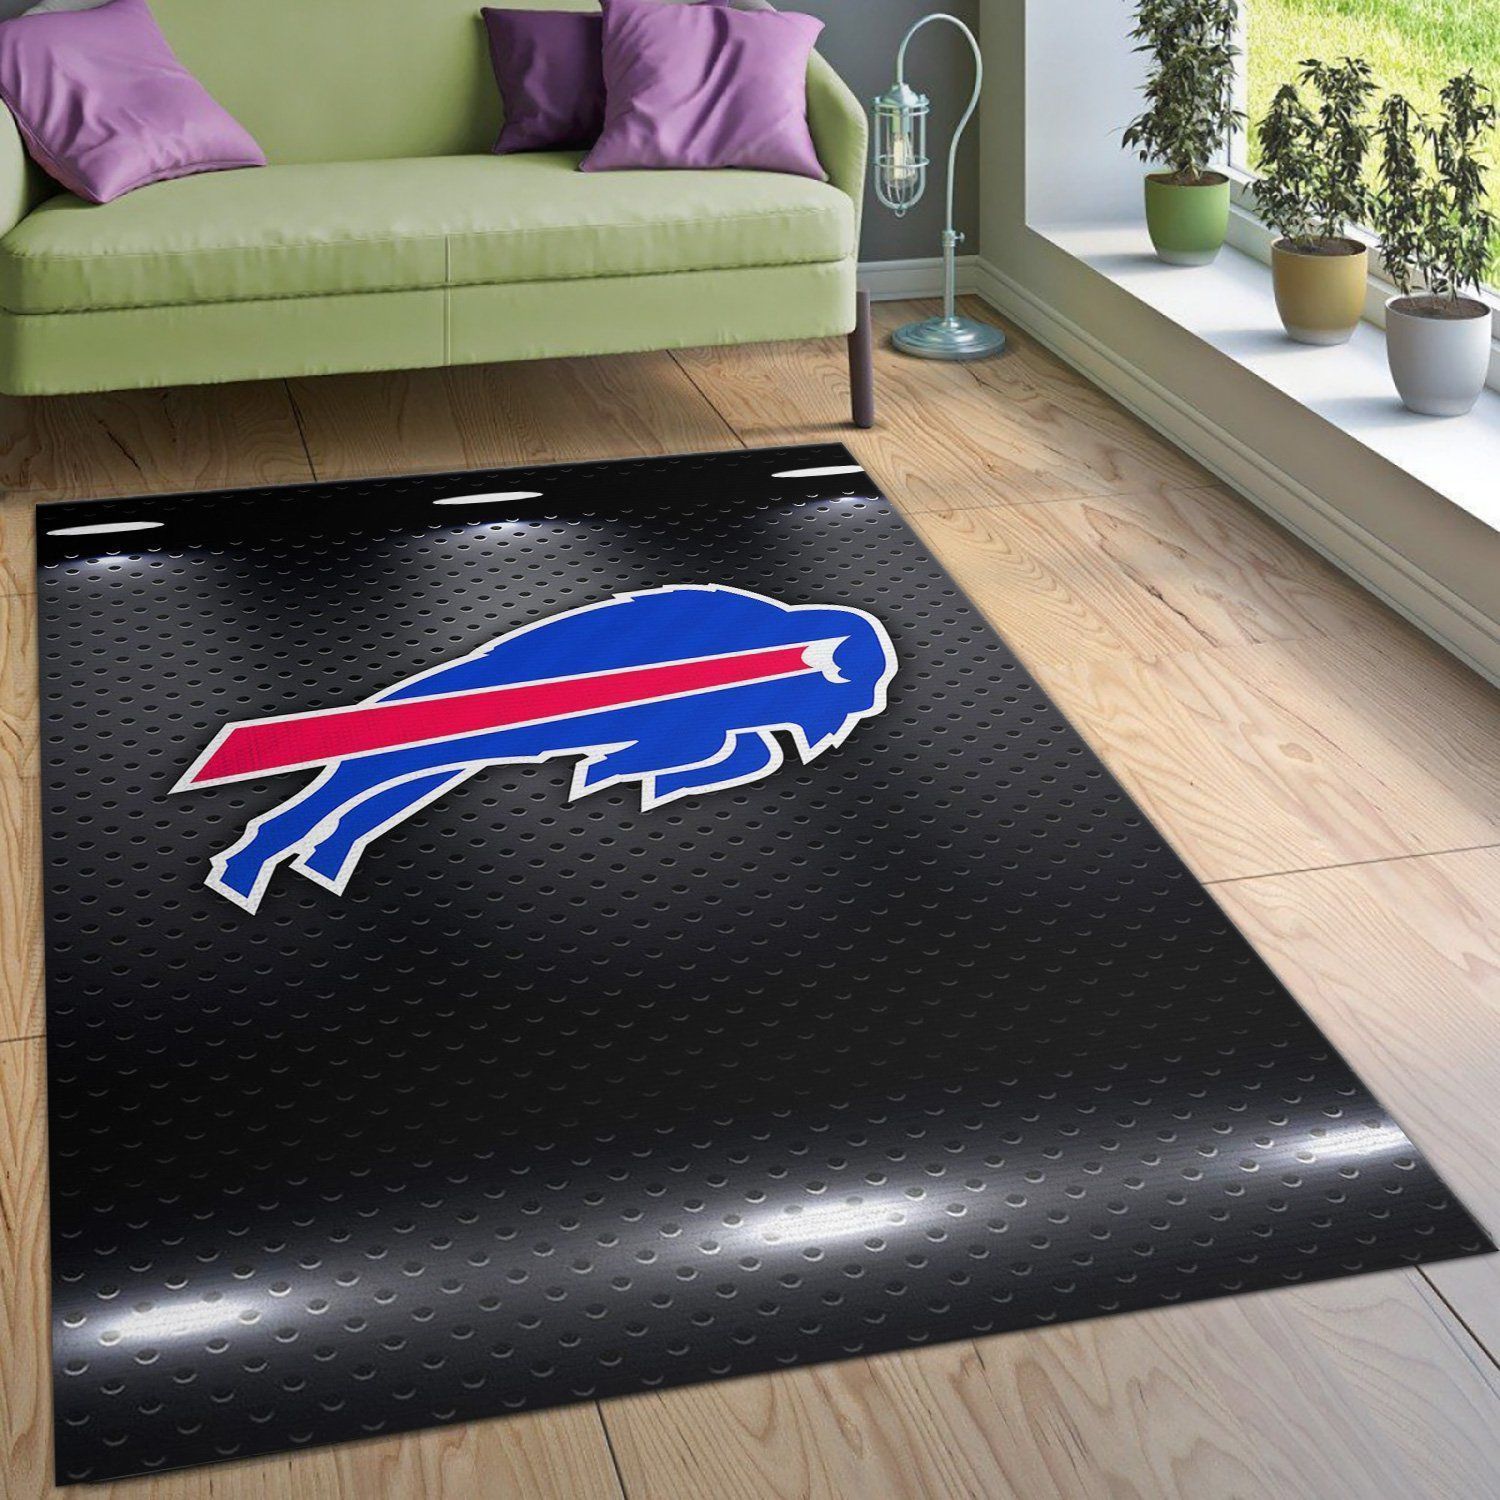 Buffalo Bills Nfl Area Rug For Gift Living Room Rug Home Decor Floor Decor - Indoor Outdoor Rugs 3